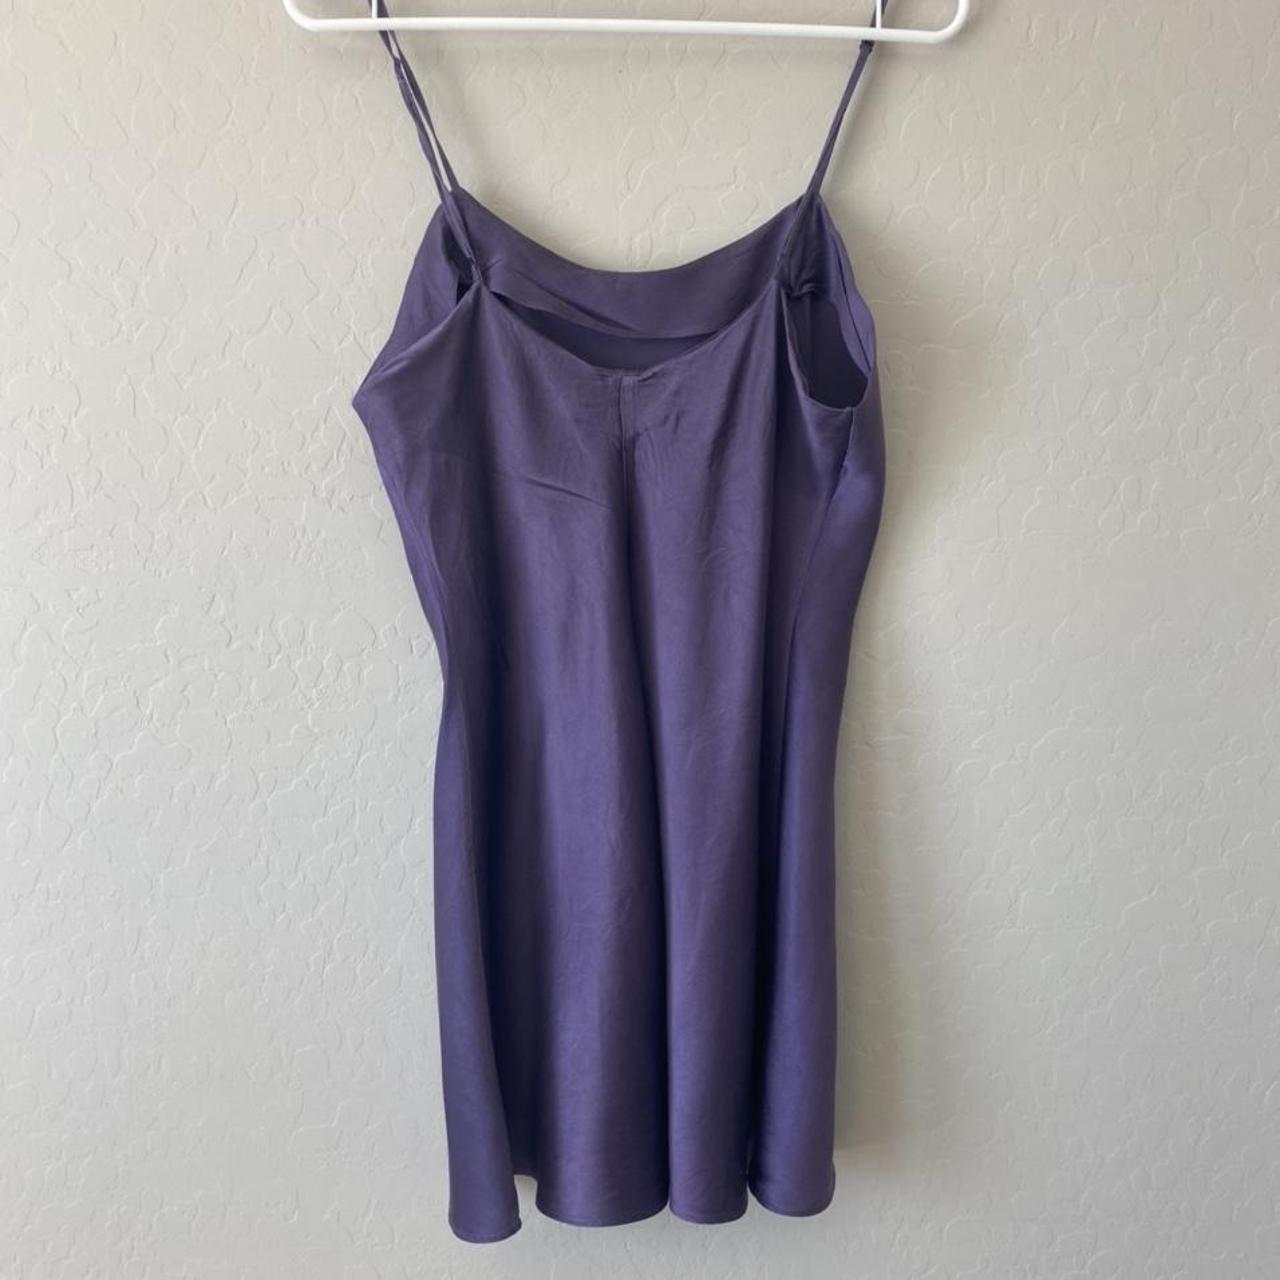 Purple vintage Victoria Secret slip dress 🧞‍♀️ slits on... - Depop